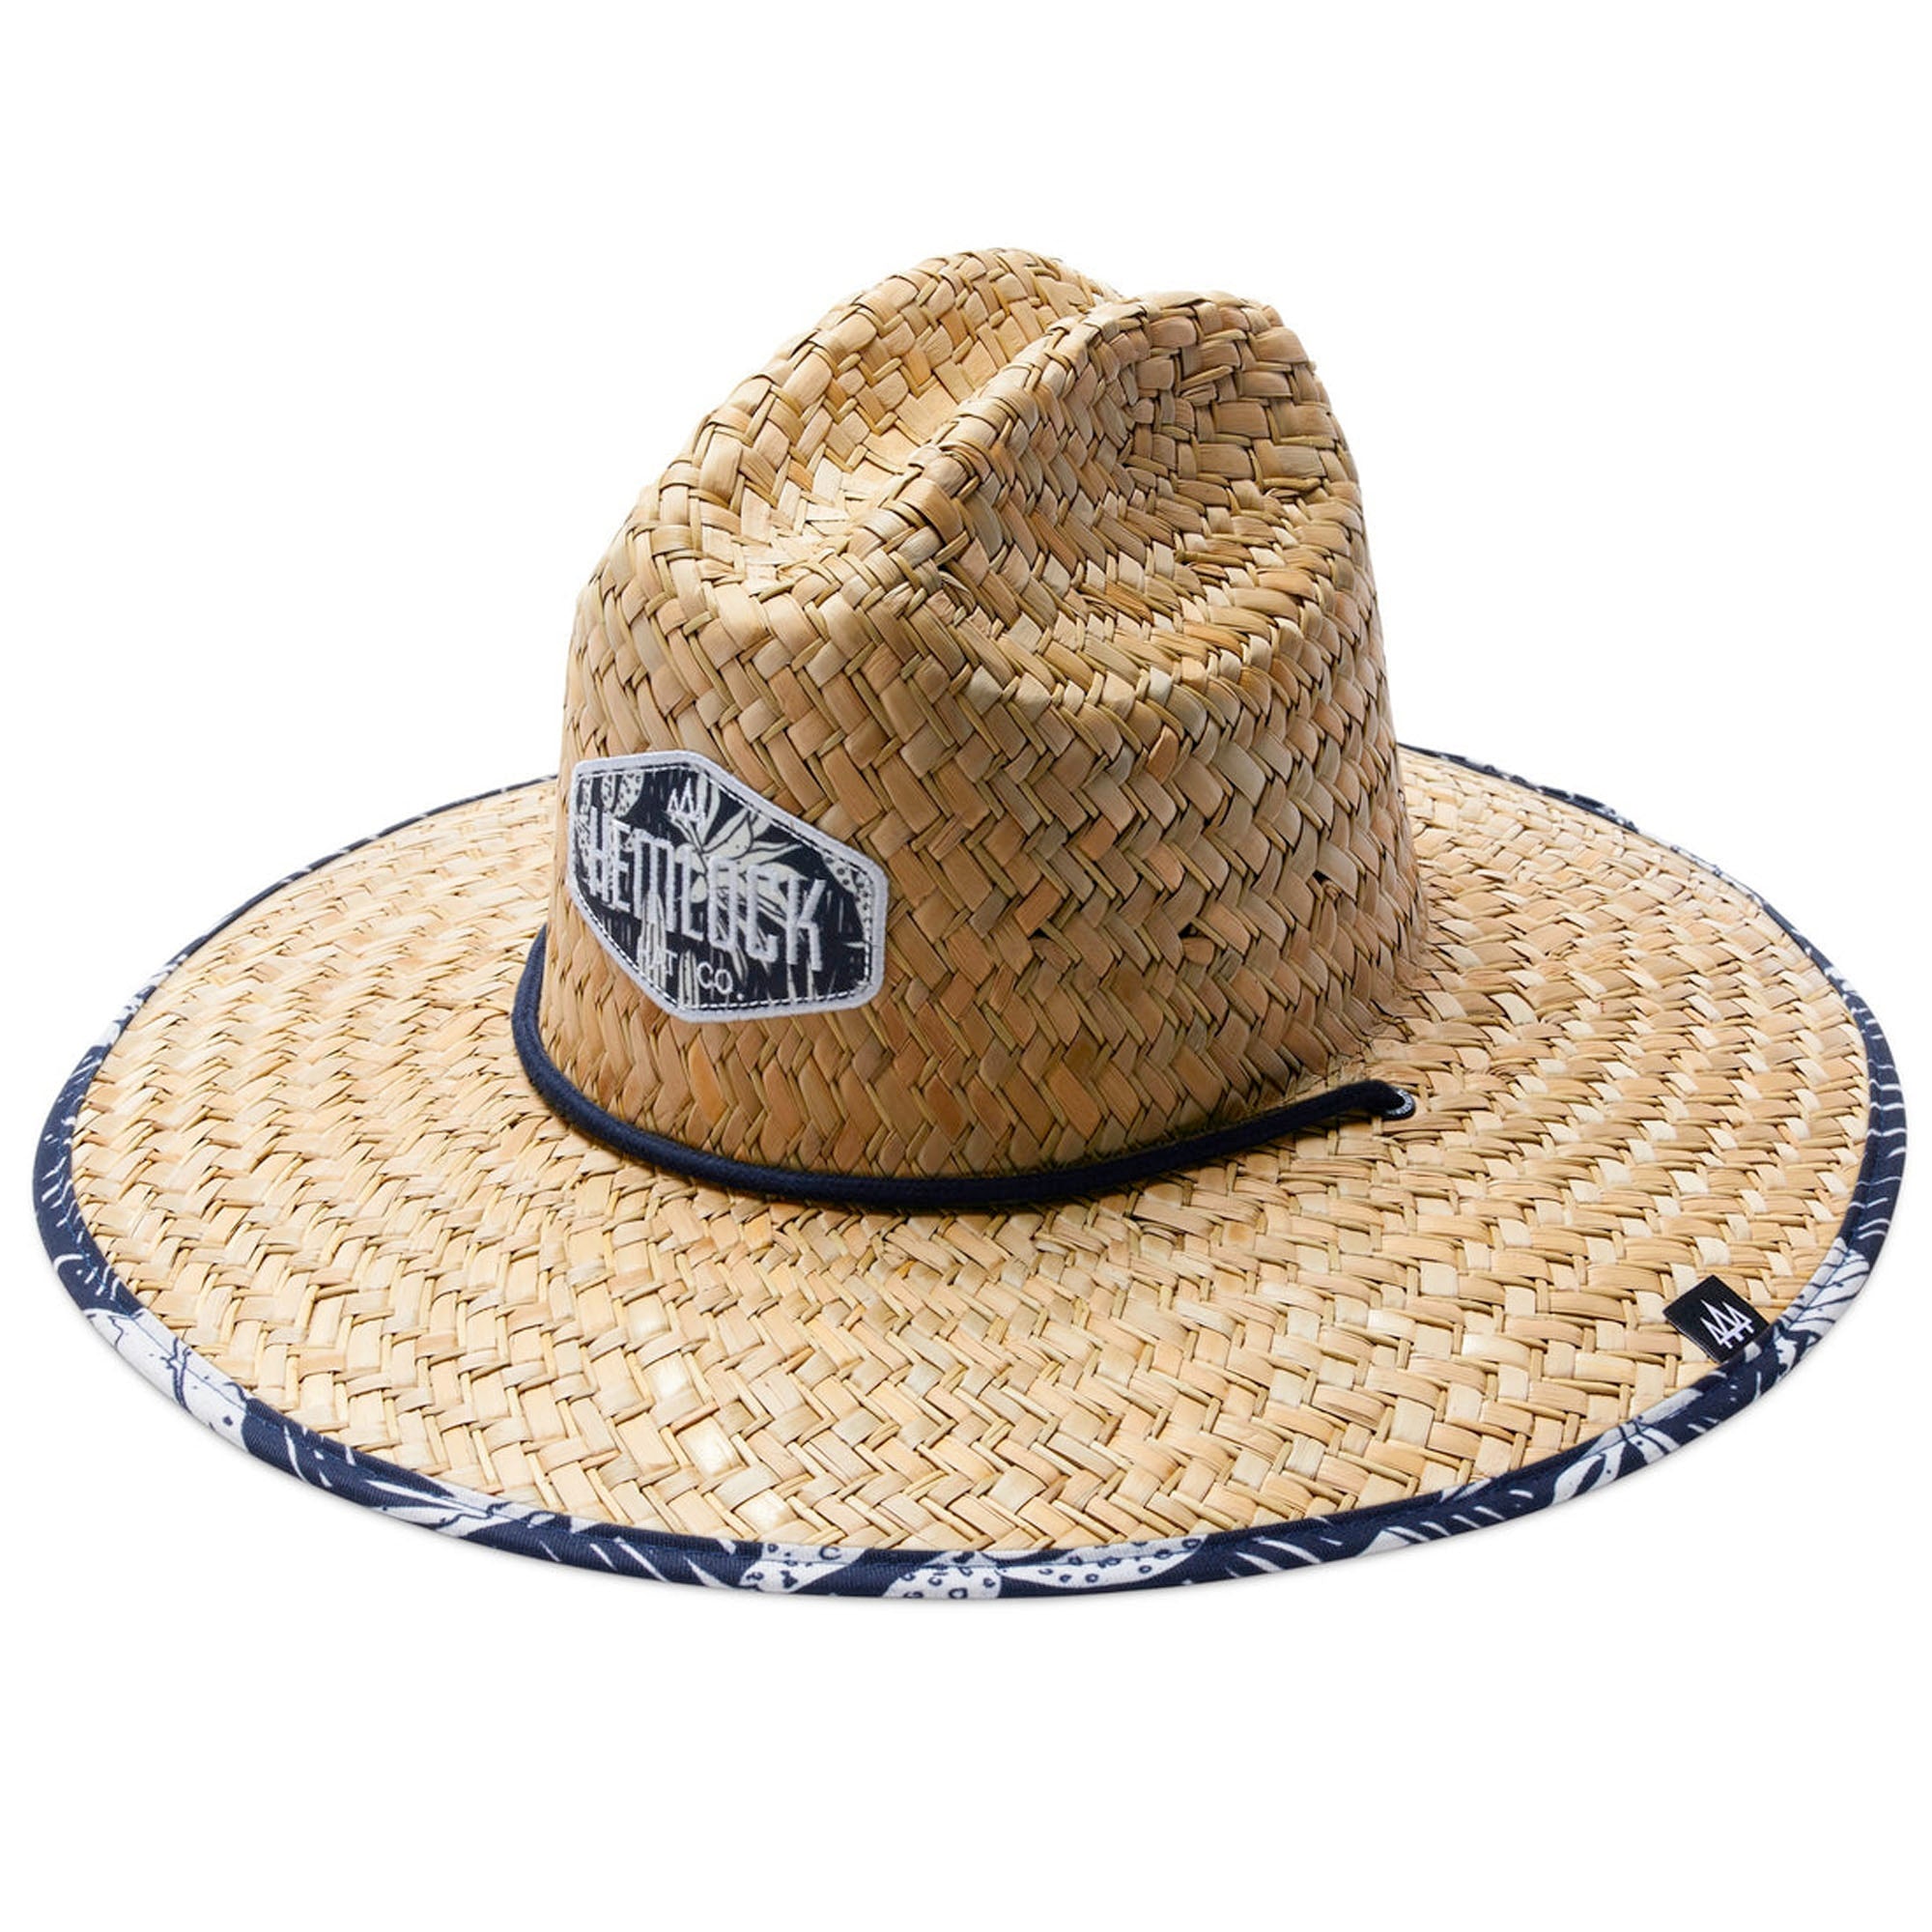 Conner Hats Men's Myrtle Beach Straw Hat, Natural, S/M